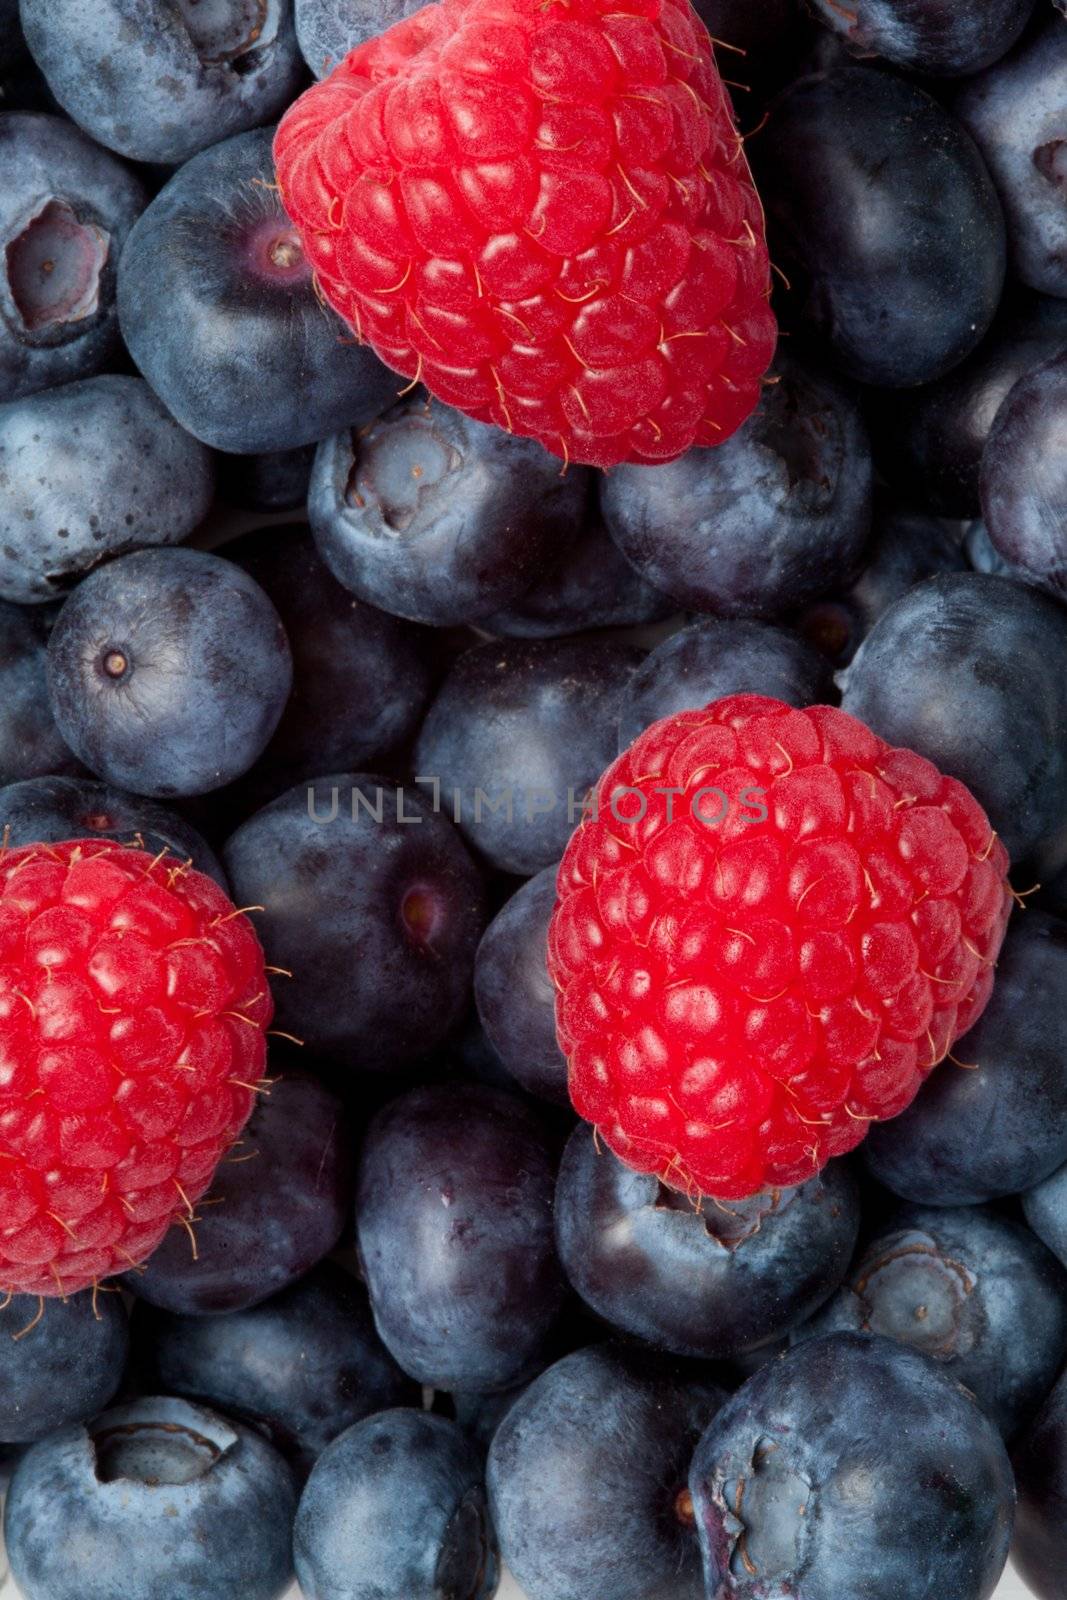 Raspberry on the blueblerries by Wavebreakmedia